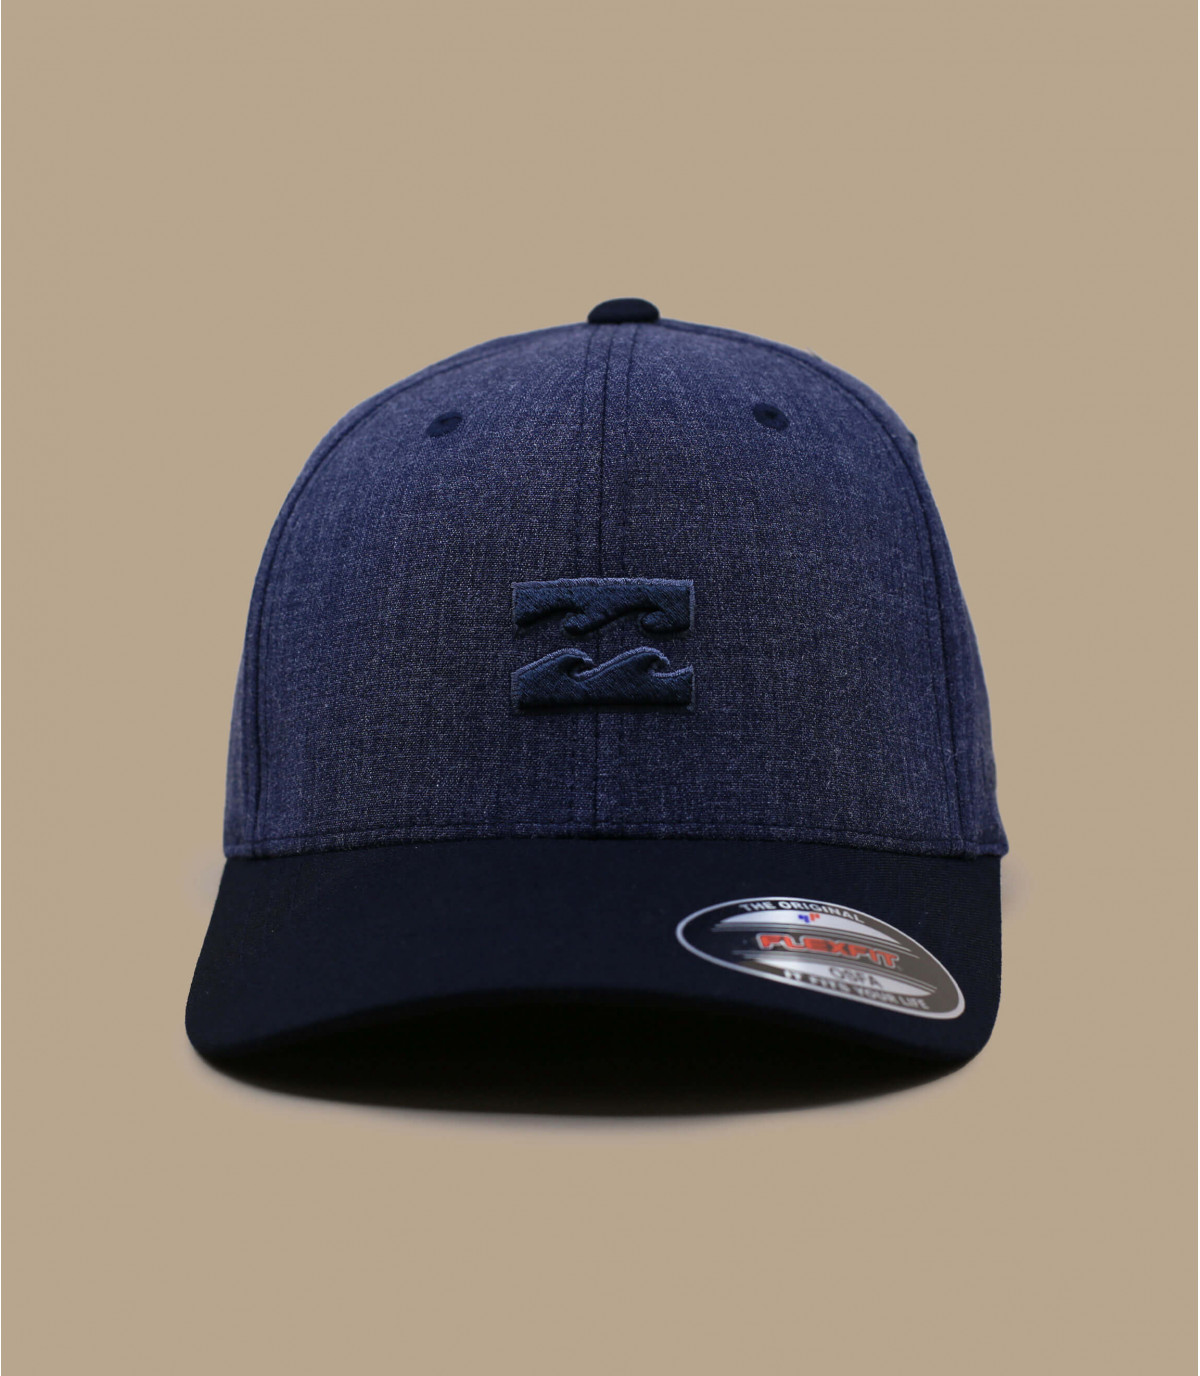 Navy blue curve cap - All Day navy Billabong : Headict